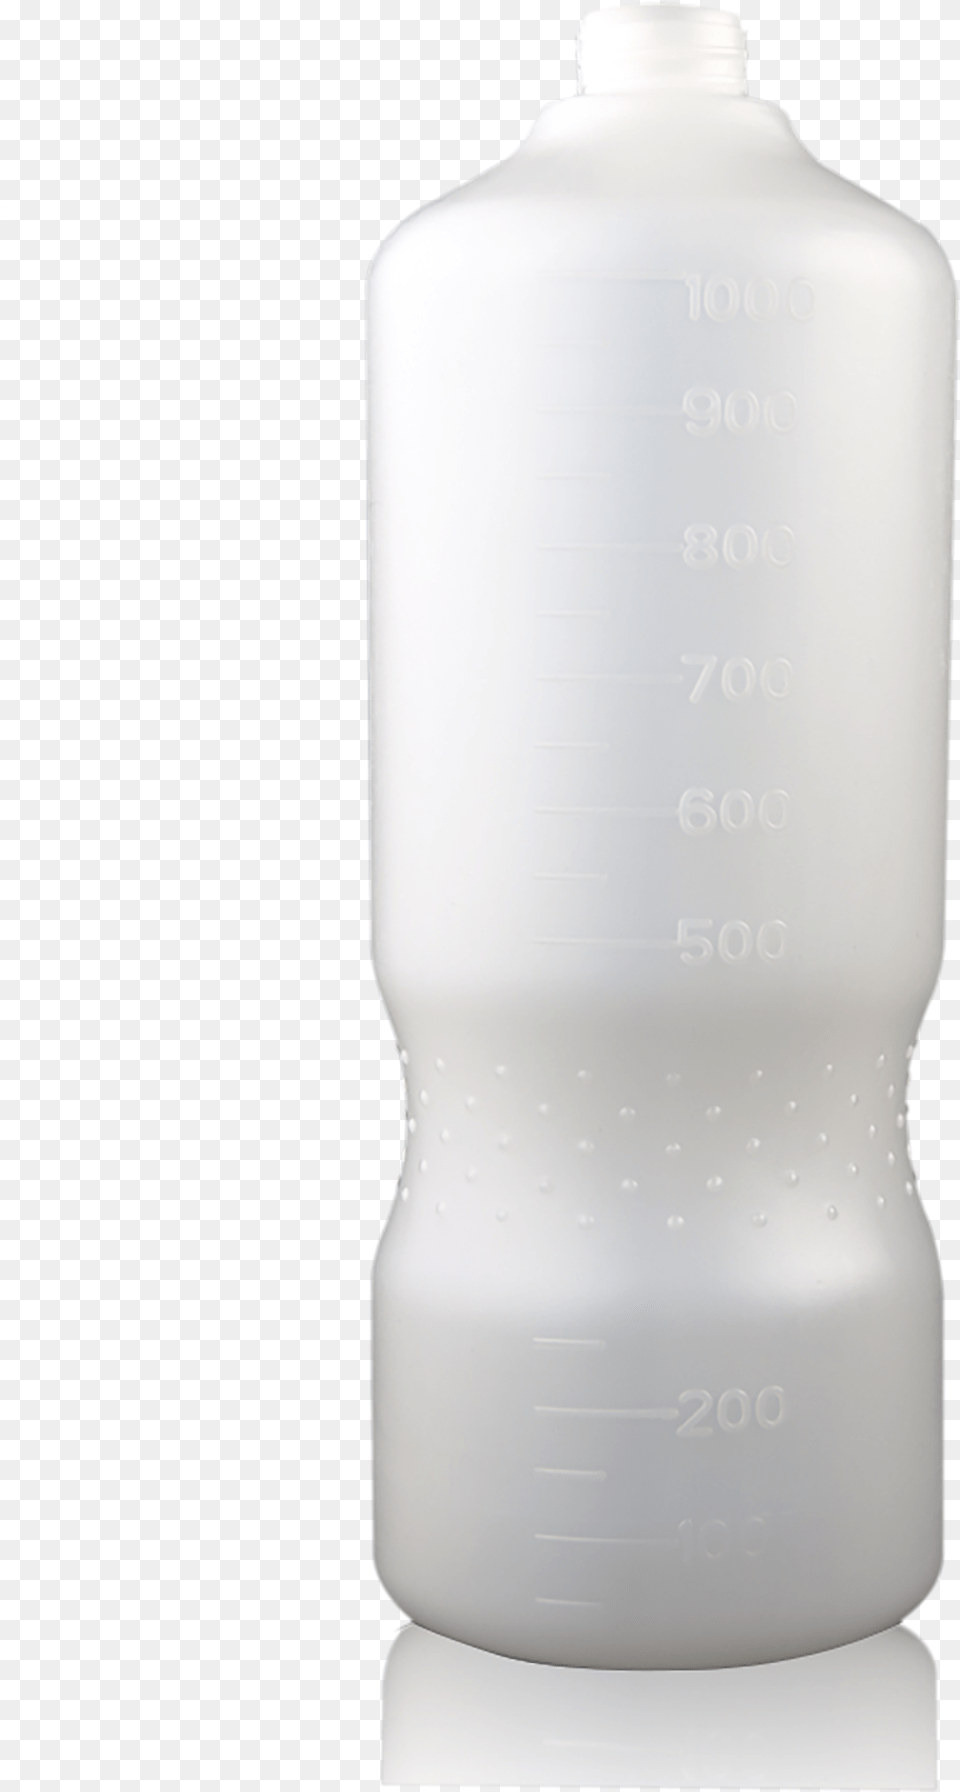 Torq Foam Cannon Replacement Bottles For Eqp321 Ampamp Plastic Bottle, Cup, Beverage, Milk, Water Bottle Free Transparent Png